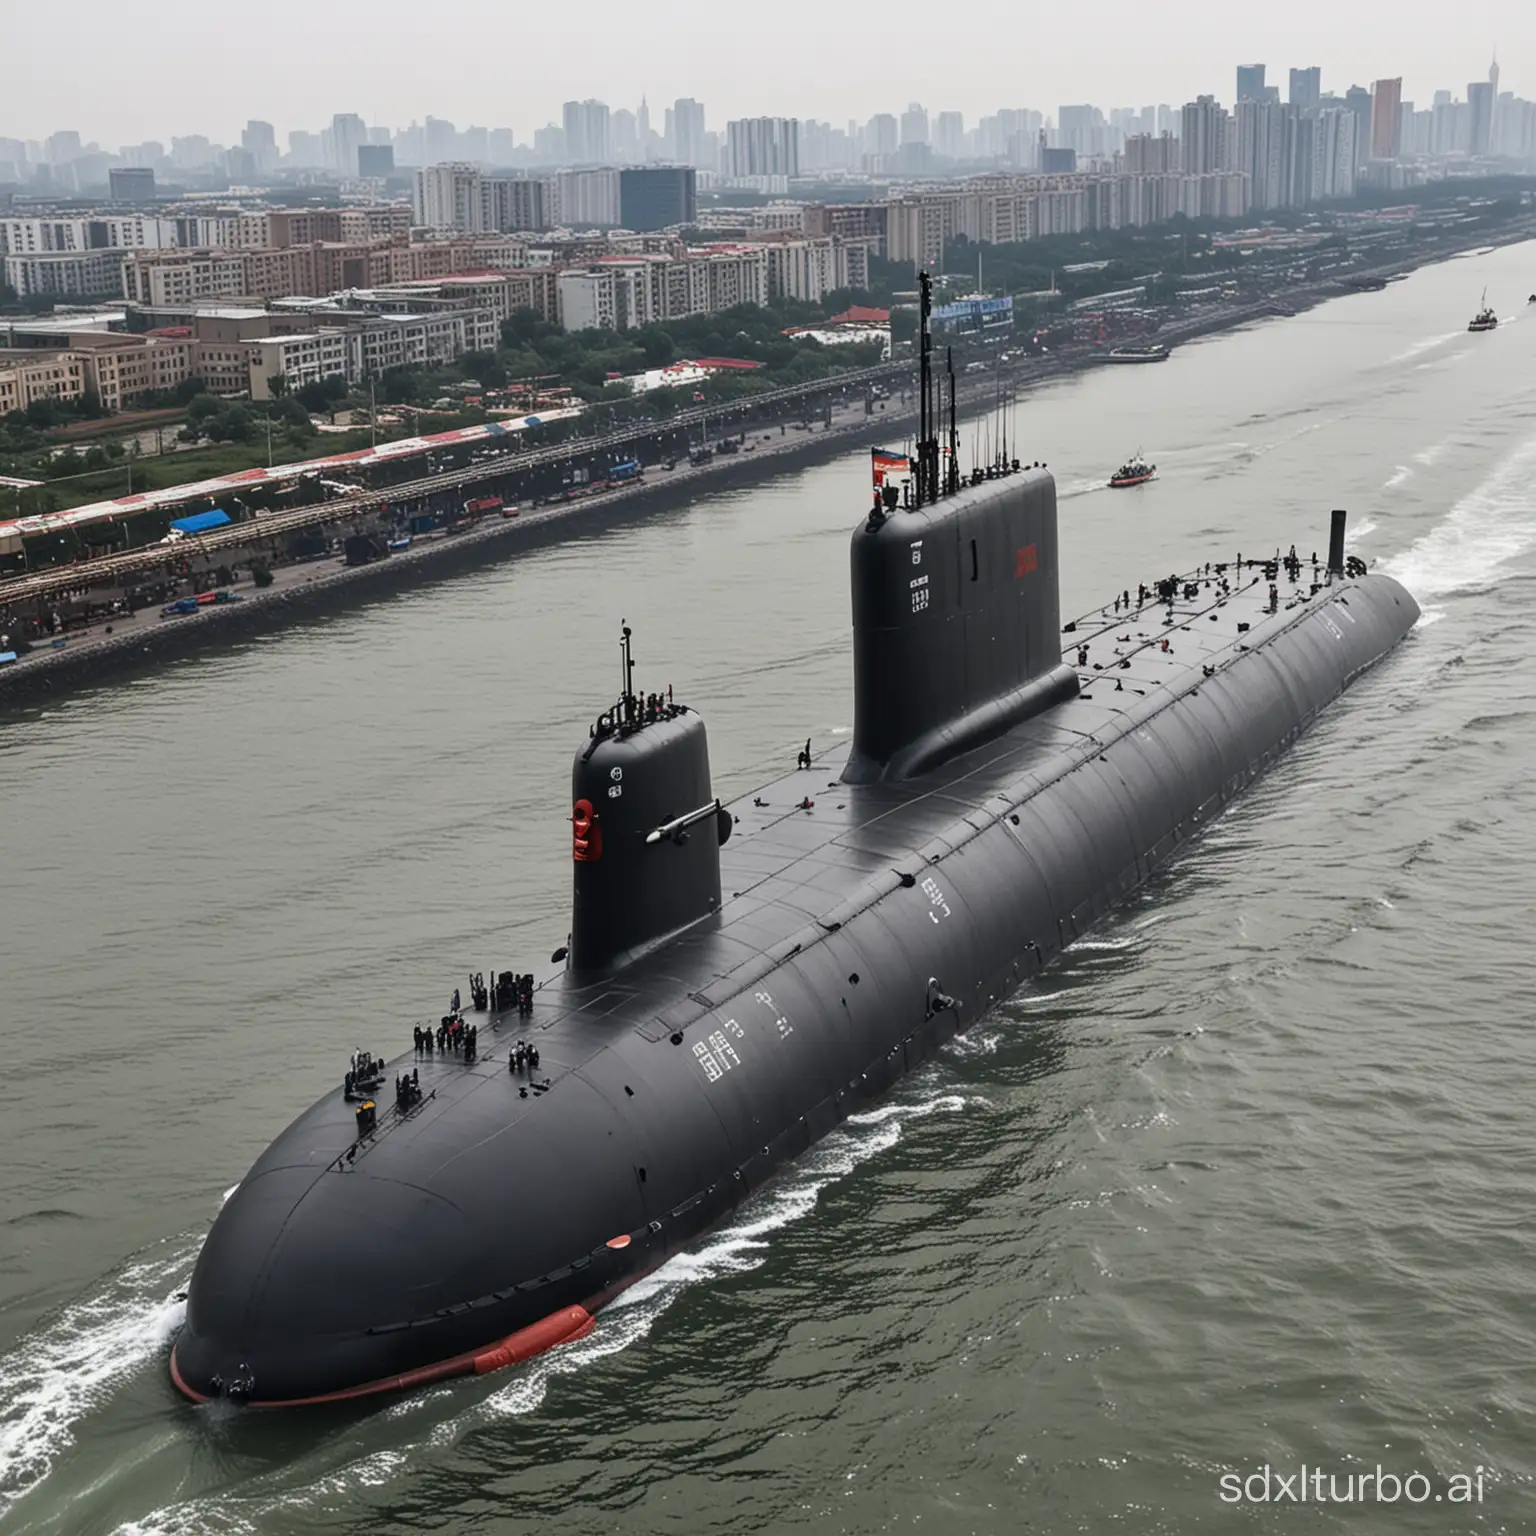 Jiaolong submarine